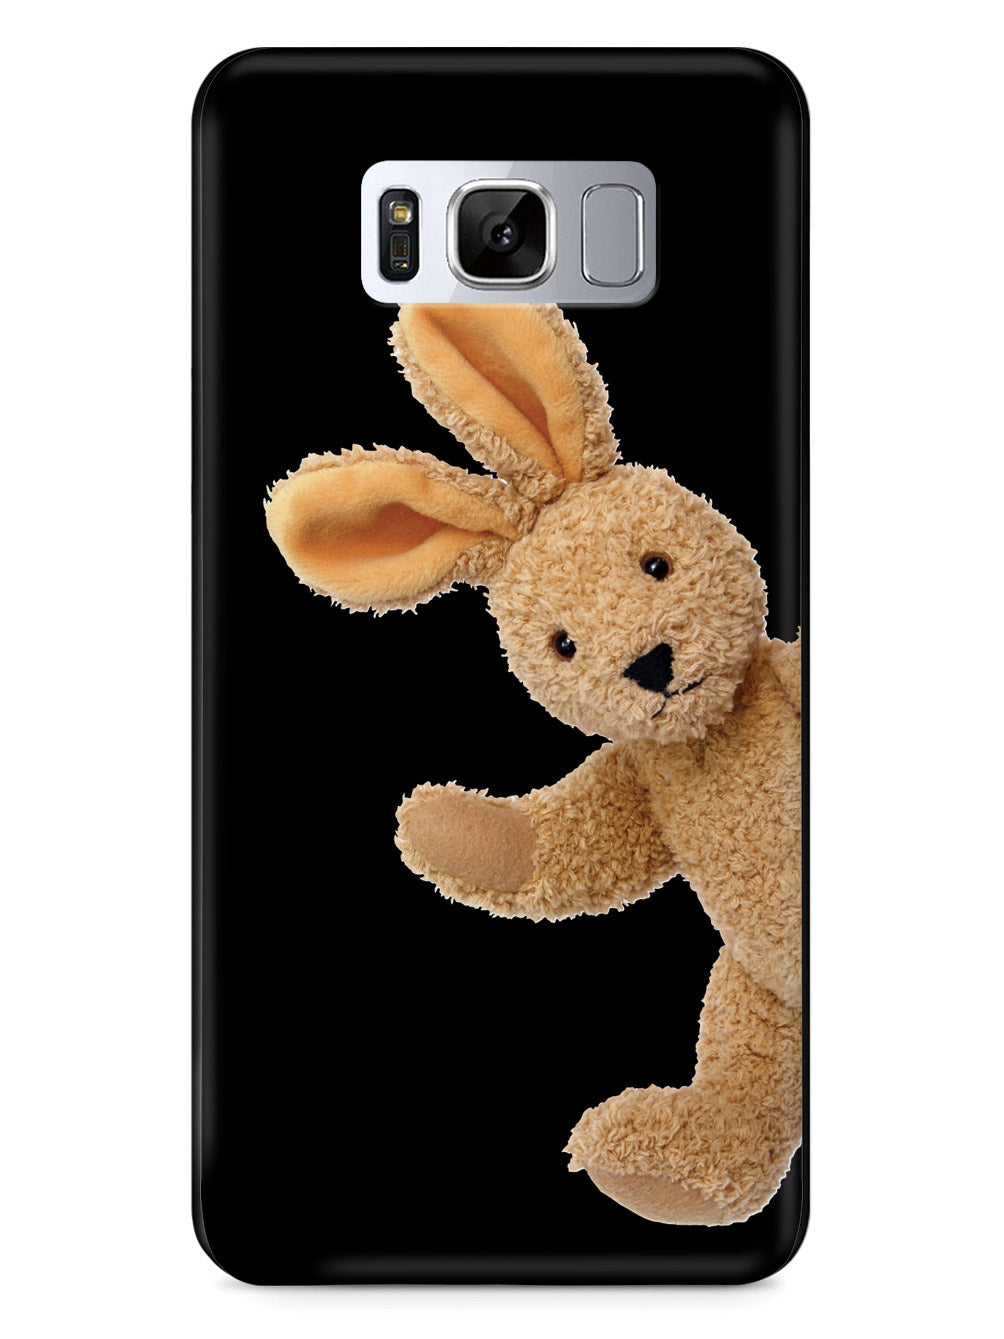 Friendly Toy Rabbit - Black Case